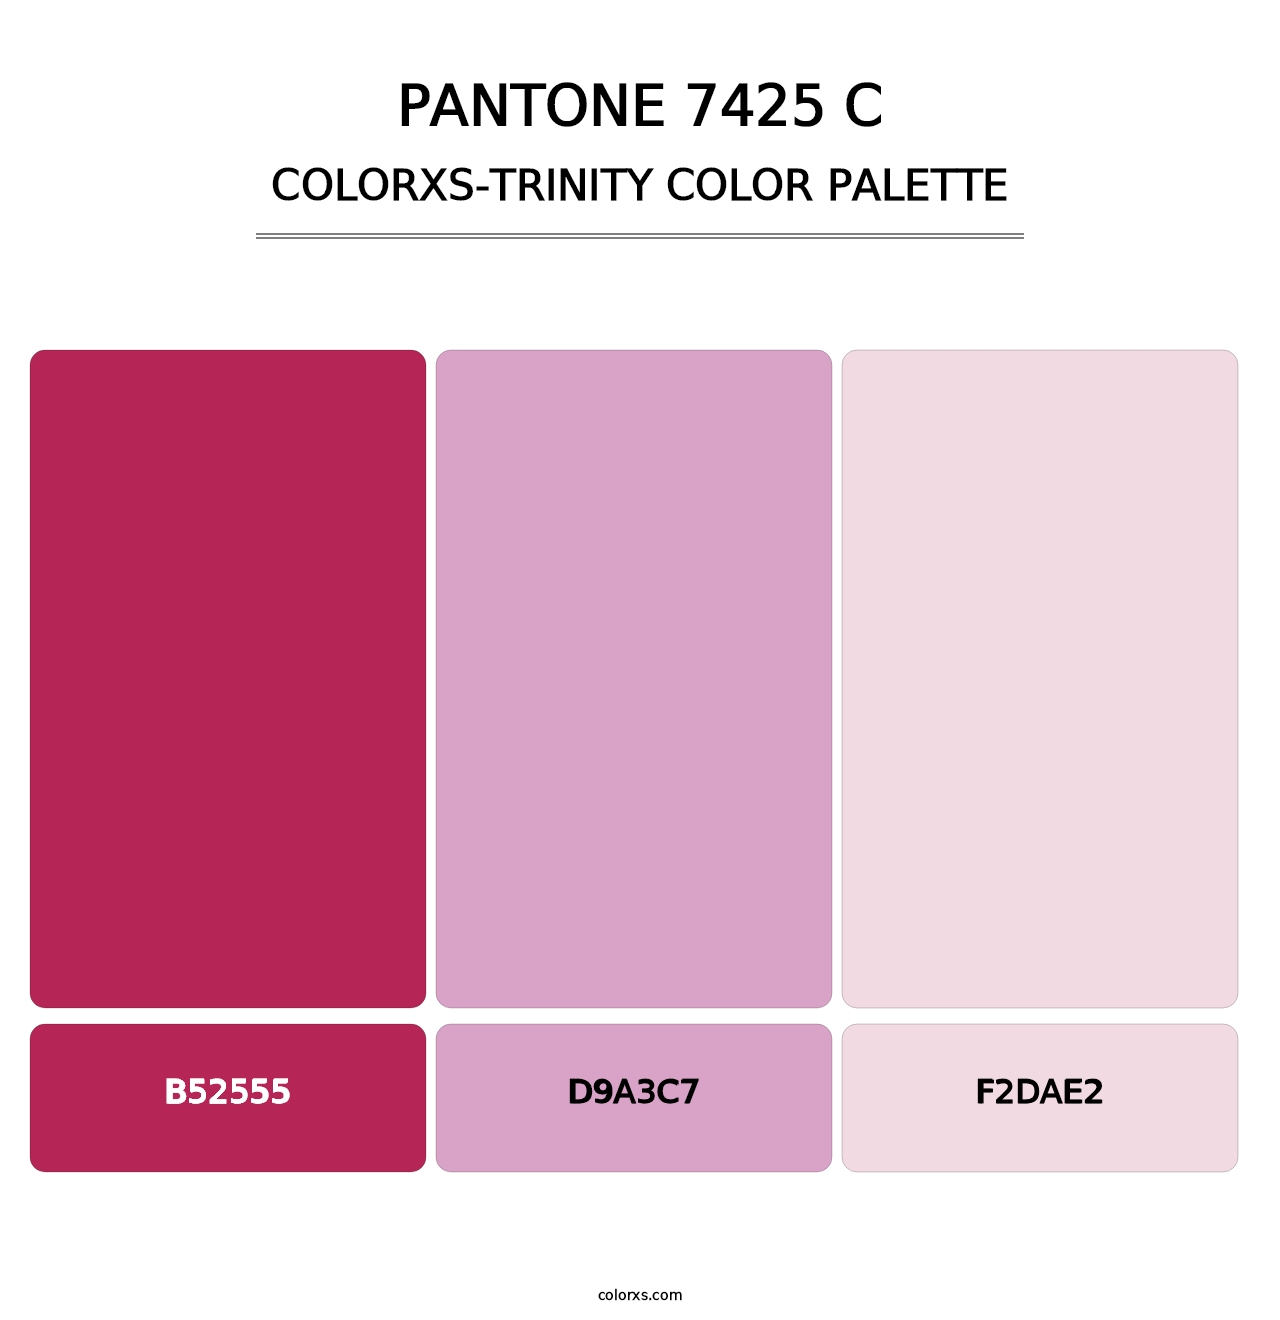 PANTONE 7425 C - Colorxs Trinity Palette